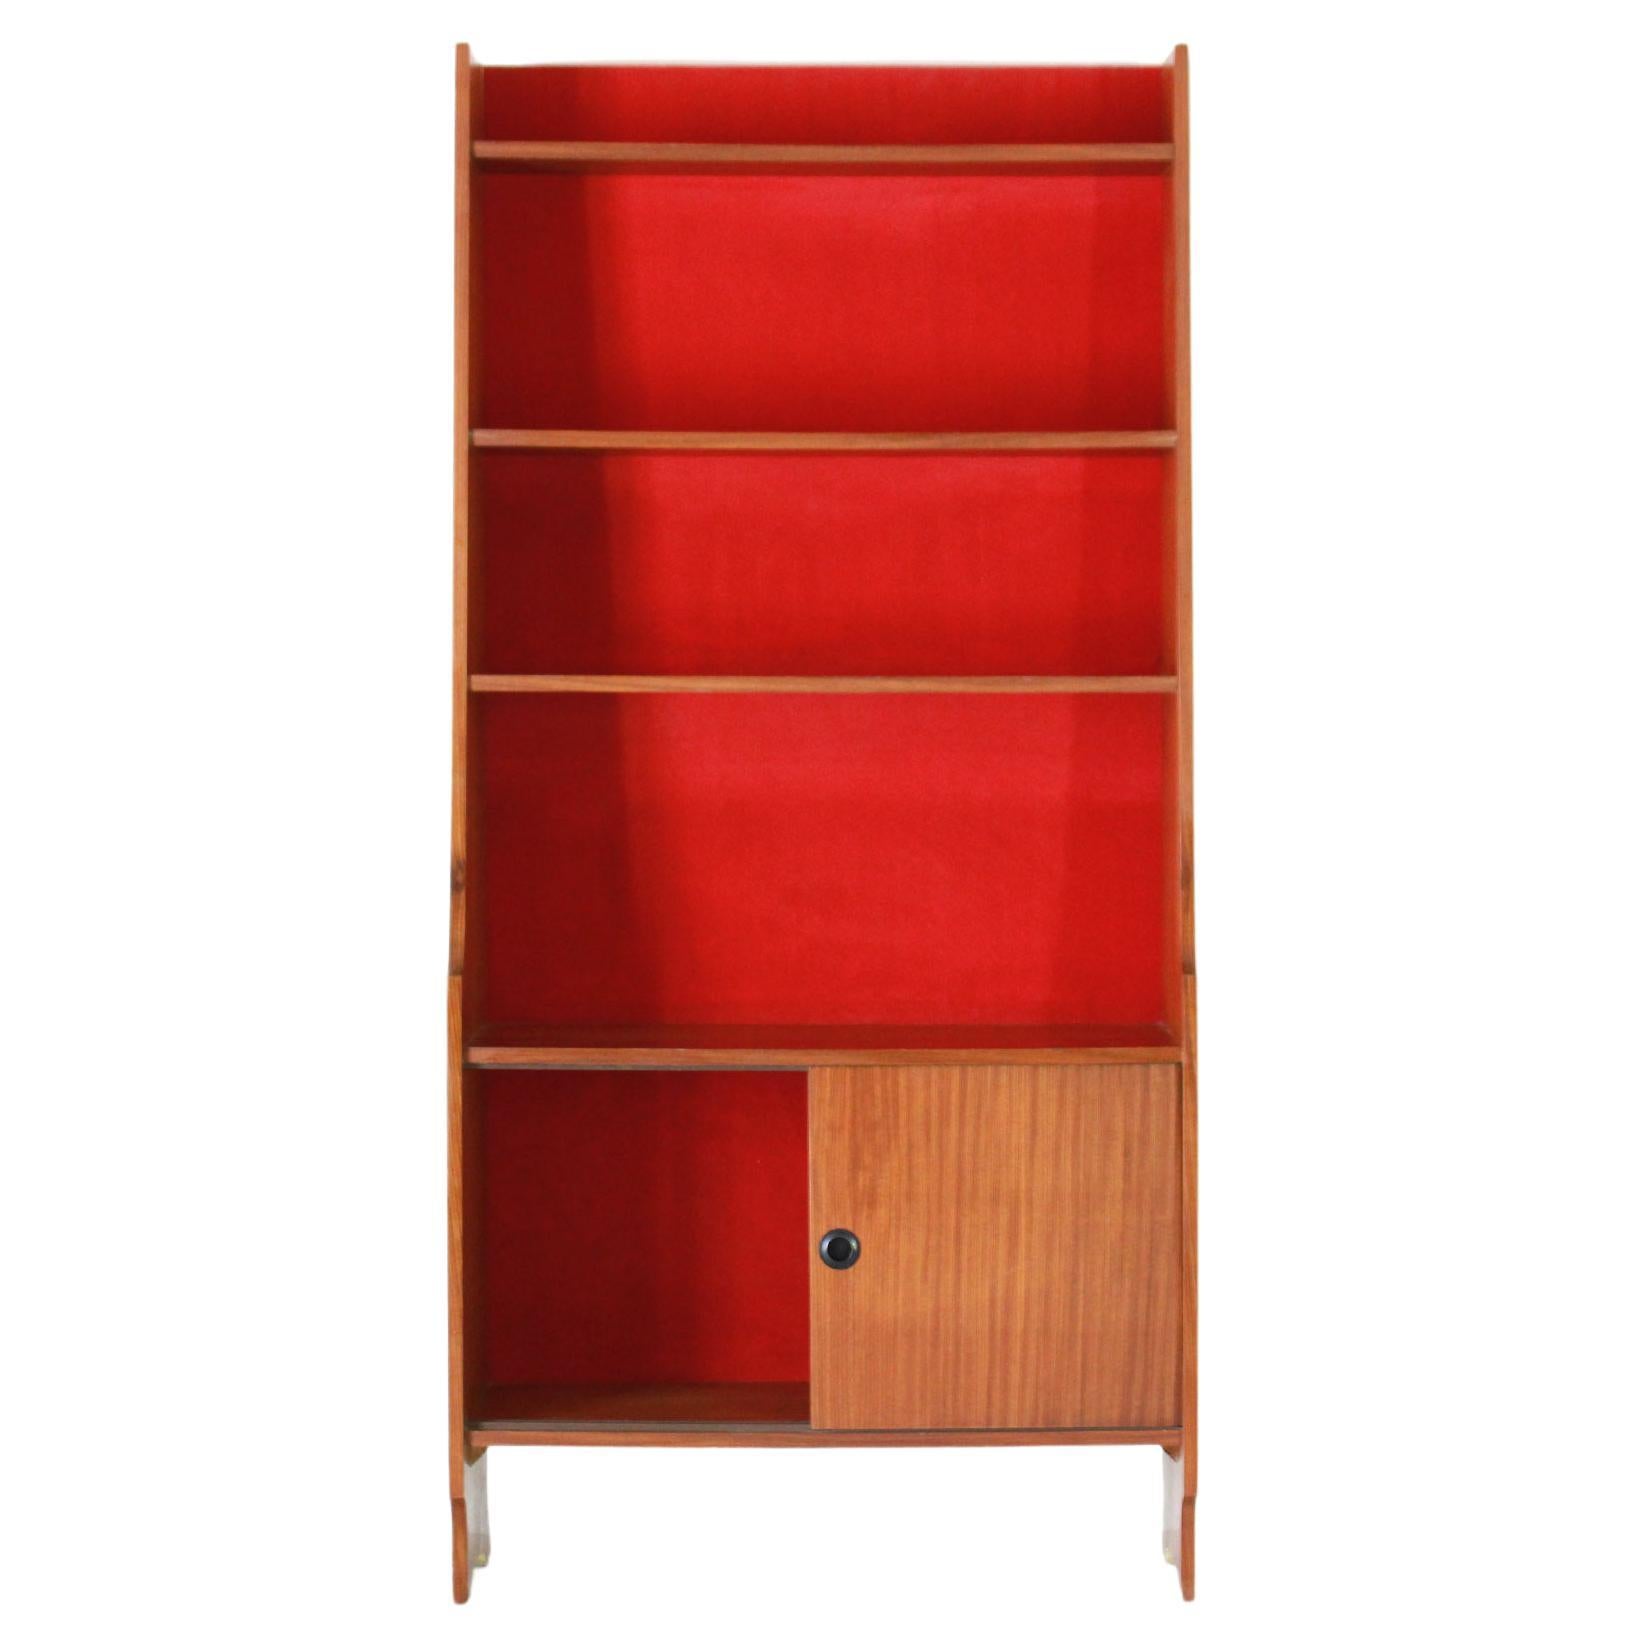 1960s Scandinavian Teak and Velvet Vintage Book Shelf with Modular Structure